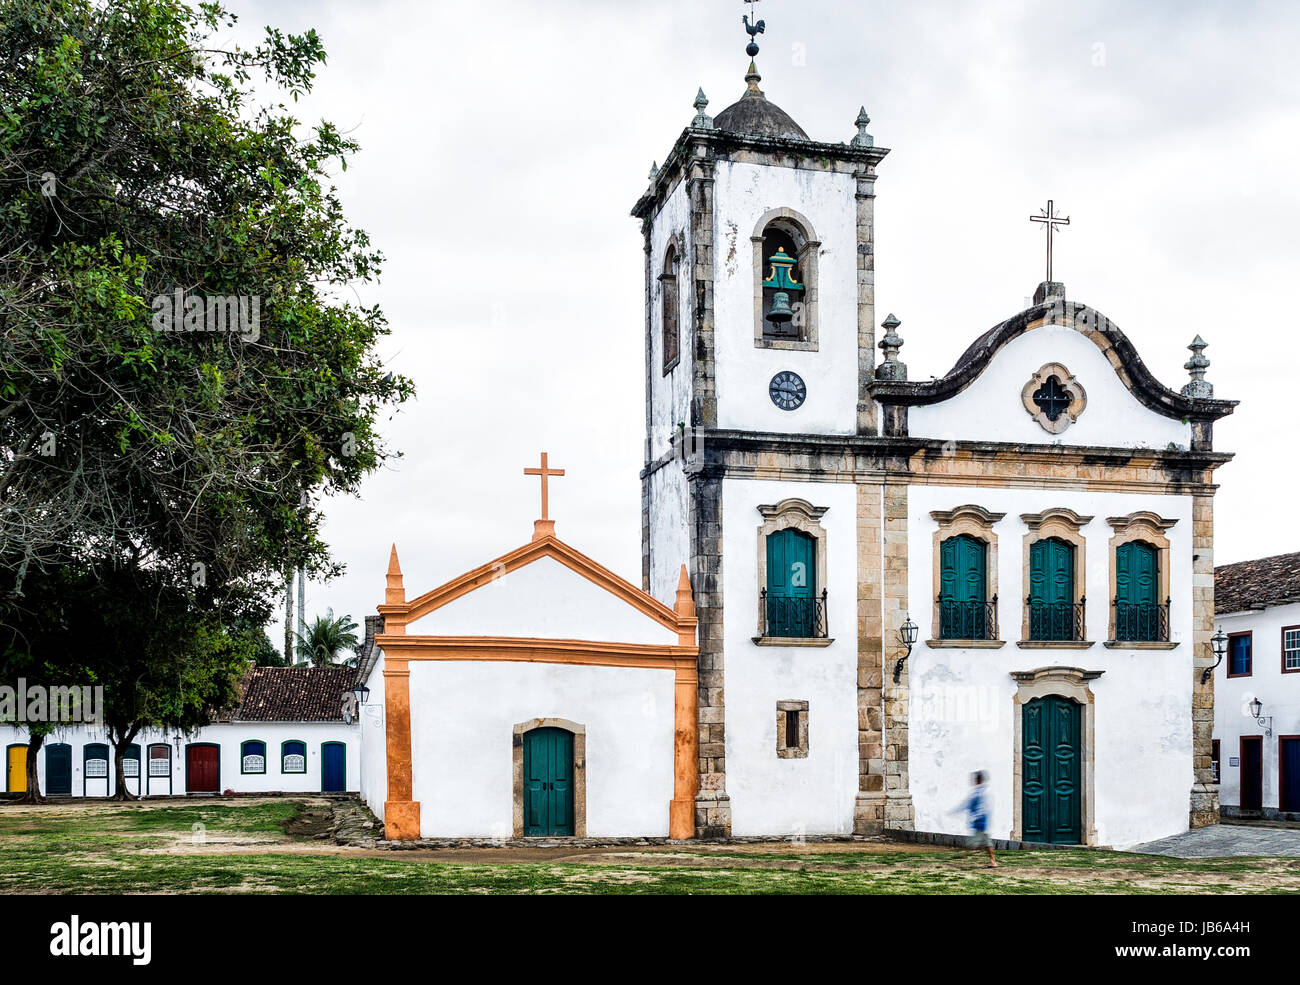 Santa Rita De Cassia chiesa costruita nel 1722. Paraty, Rio de Janeiro, Brasile. Foto Stock